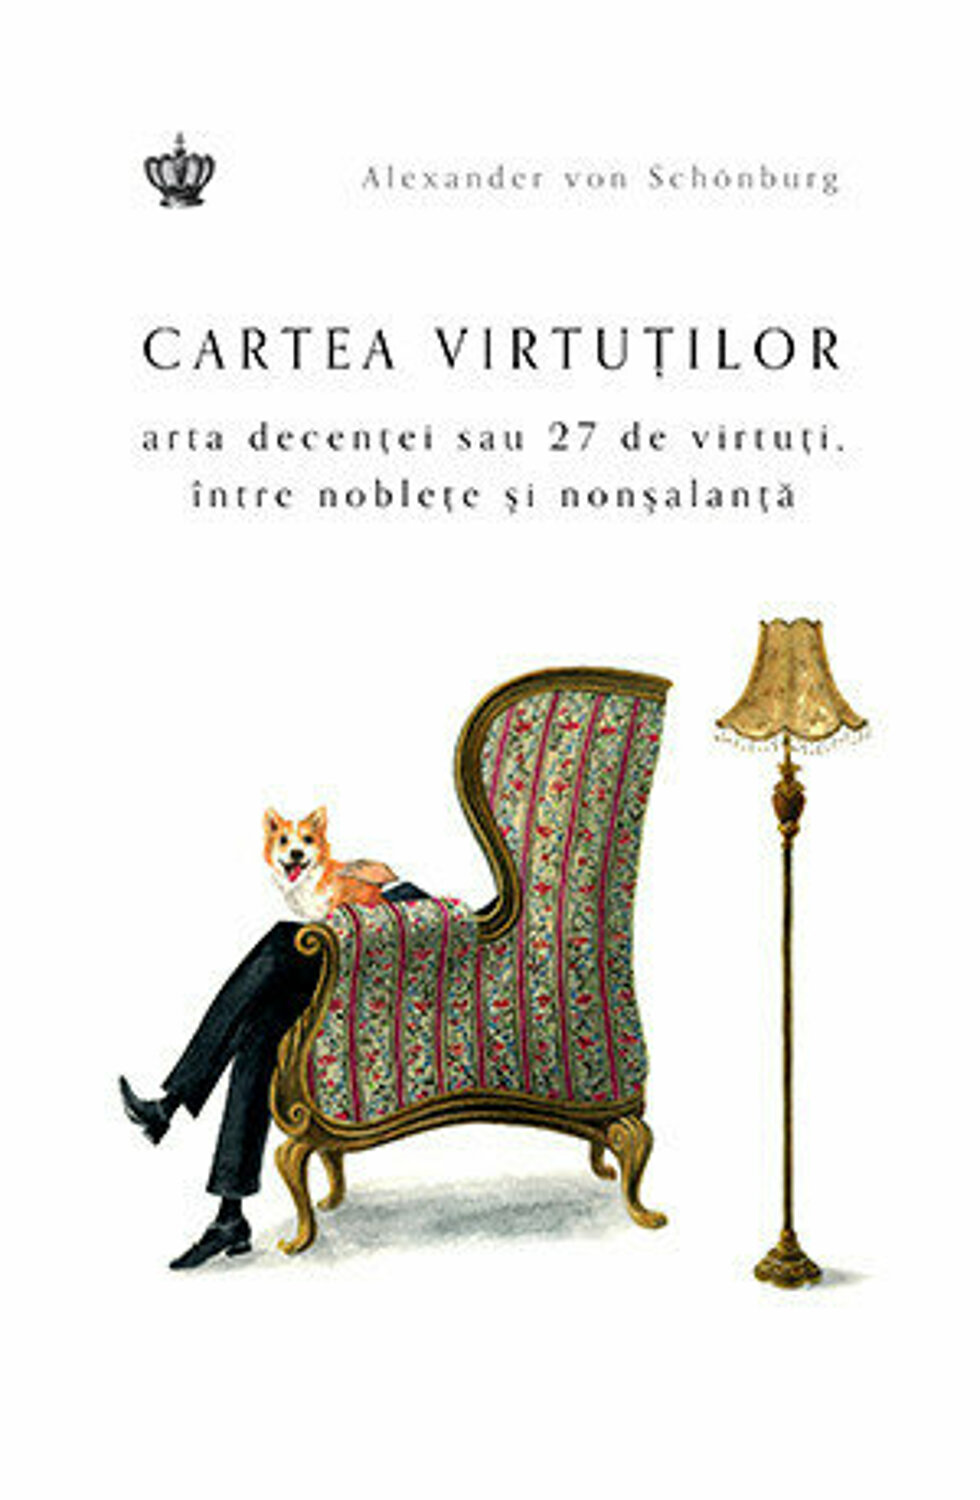 Cartea virtutilor | Alexander von Schonburg Baroque Books&Arts poza bestsellers.ro